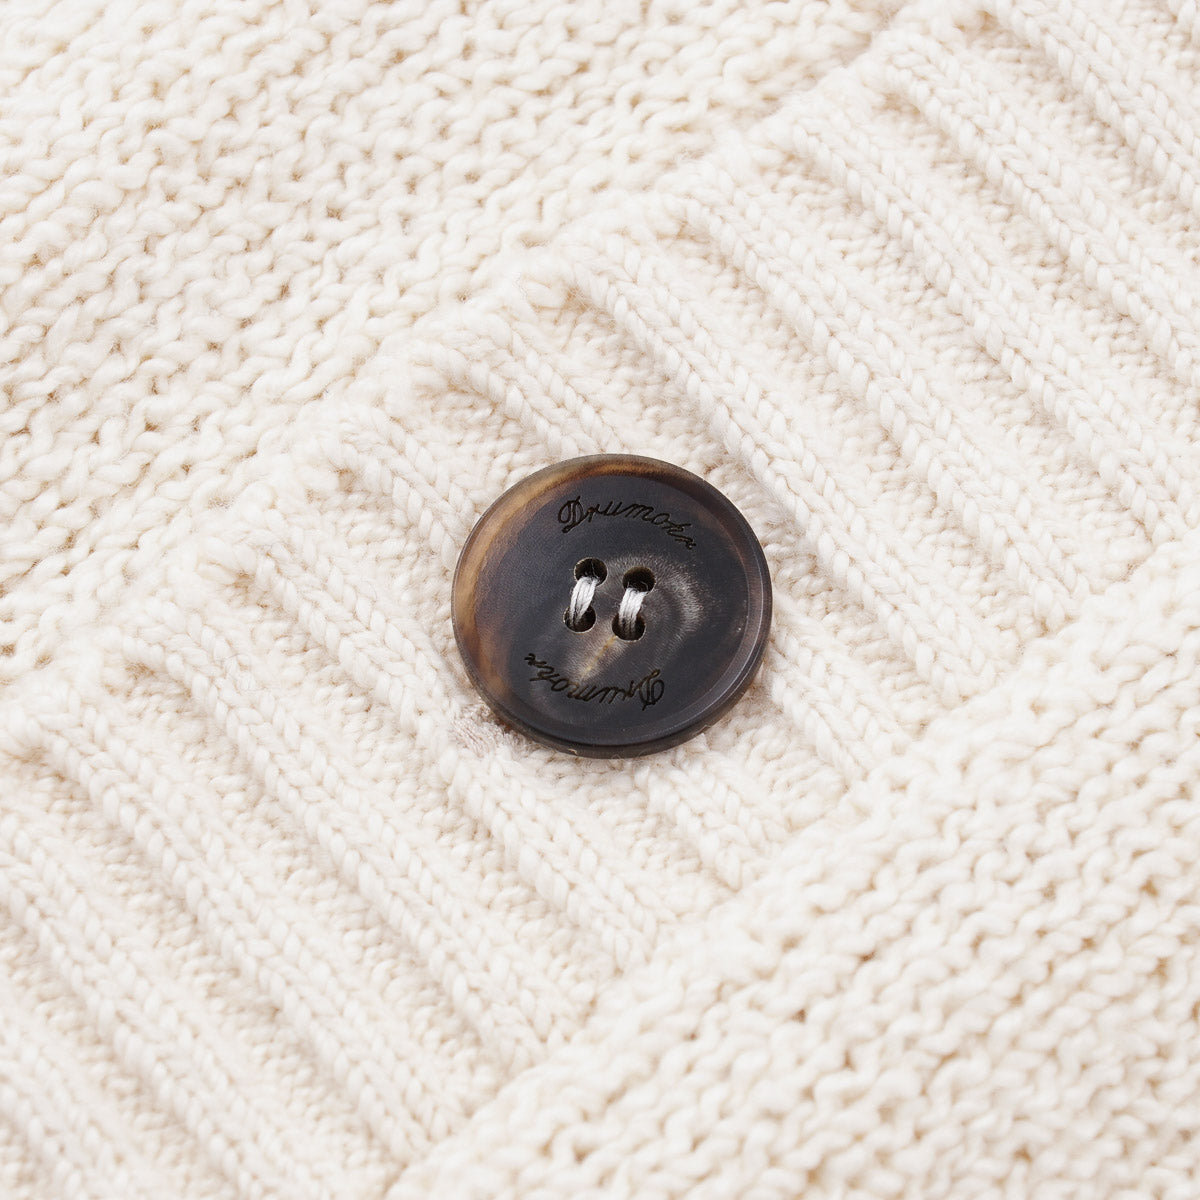 Drumohr Soft Cotton Cardigan Sweater - Top Shelf Apparel